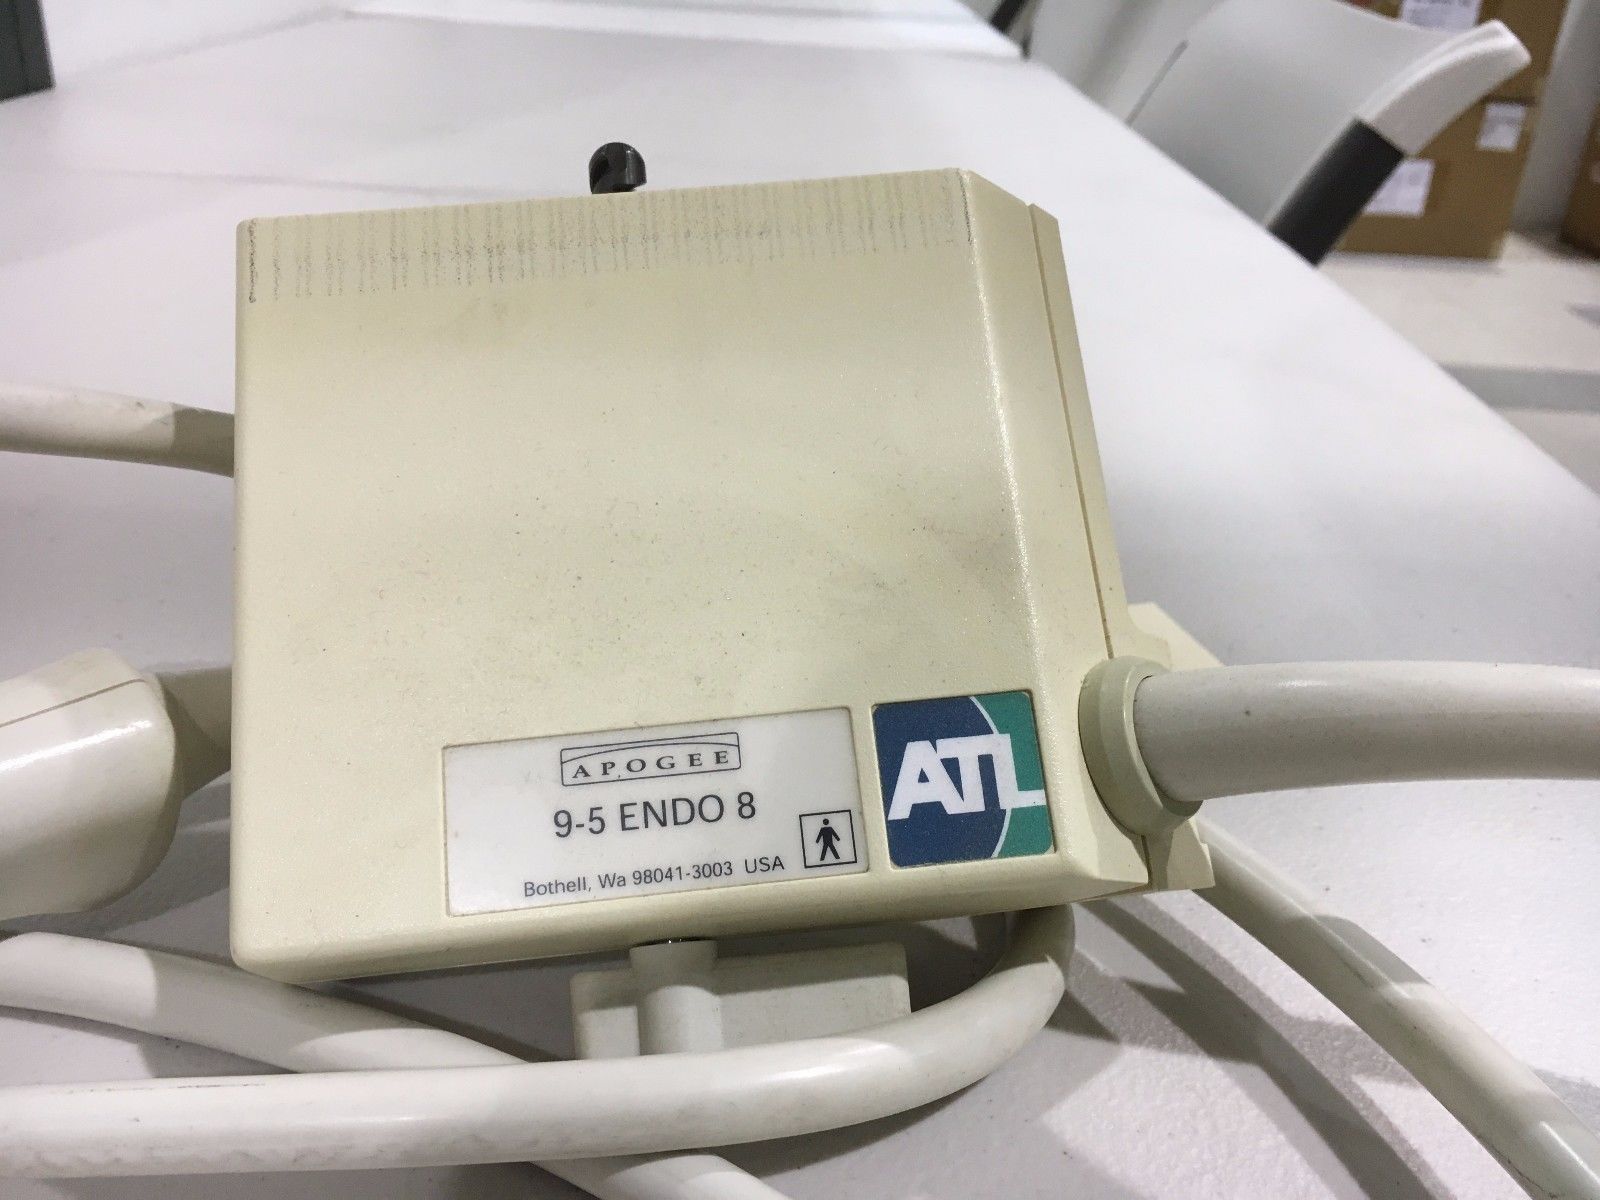 ATL Apogee 800 plus Ultrasound Probe 9-5 ENDOO 8 DIAGNOSTIC ULTRASOUND MACHINES FOR SALE